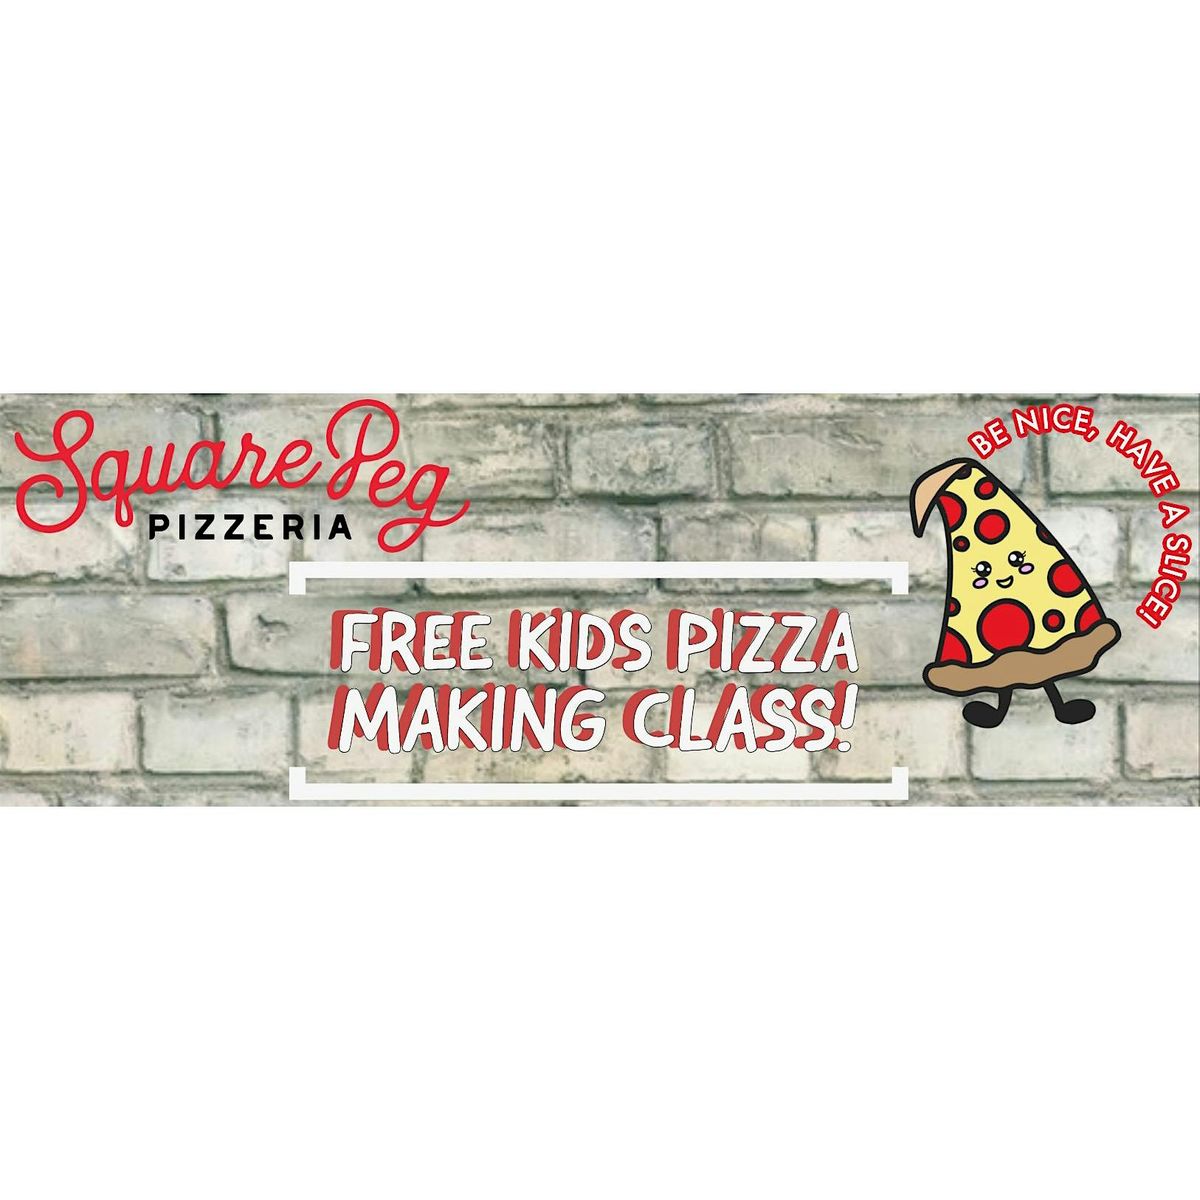 GLASTONBURY FREE KIDS PIZZA MAKING CLASS!